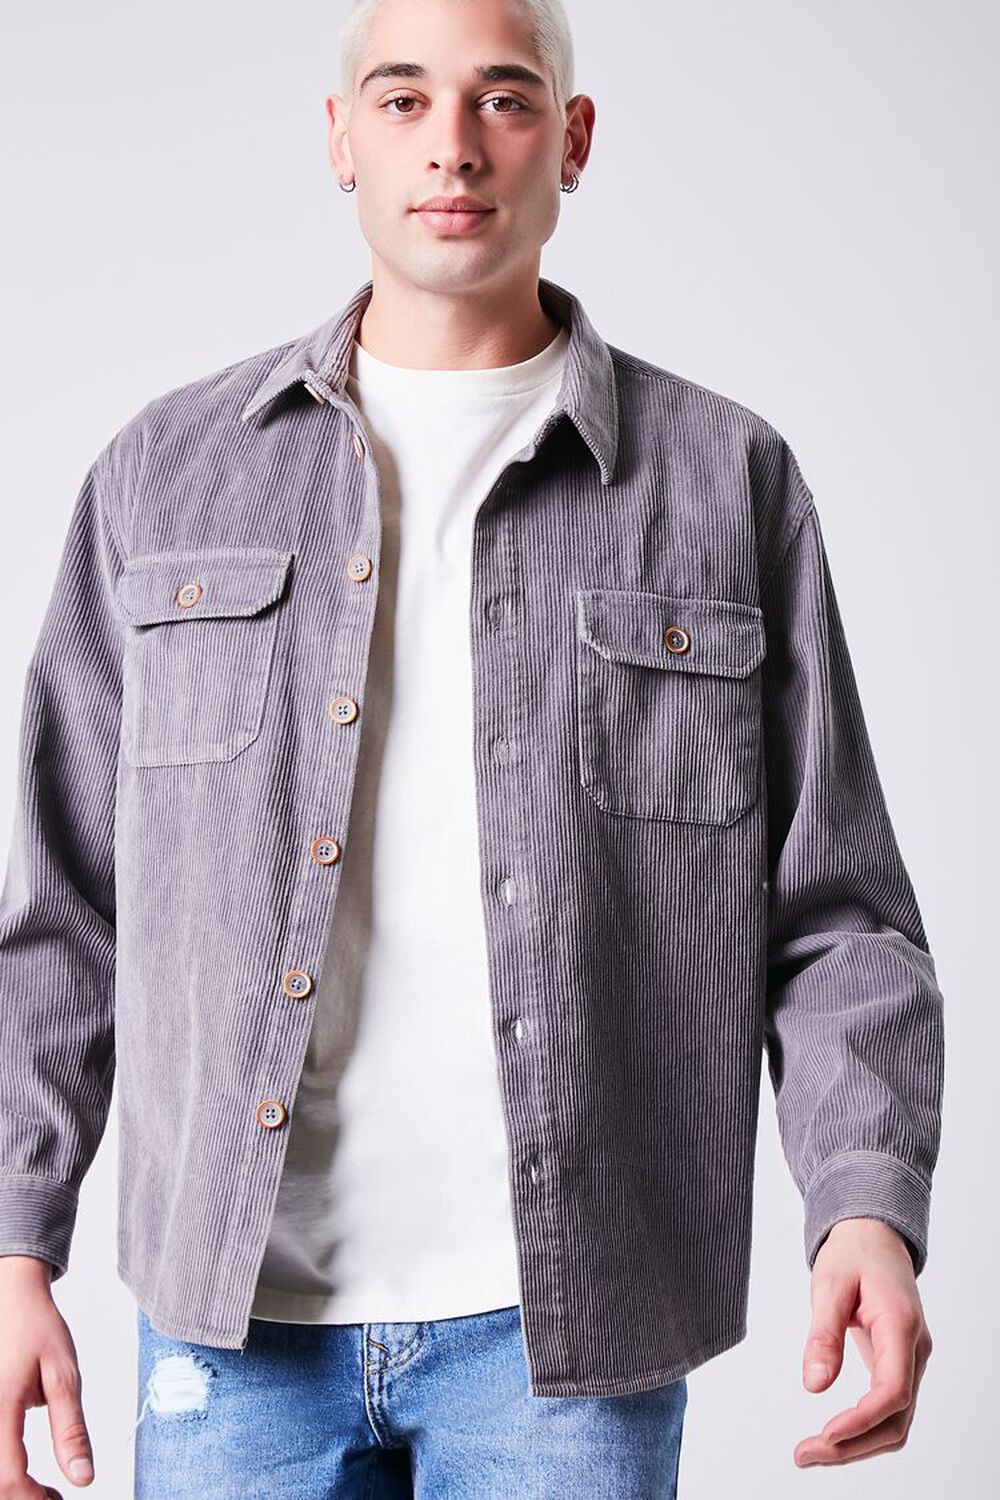 GREY Corduroy Button-Front Shirt, image 1